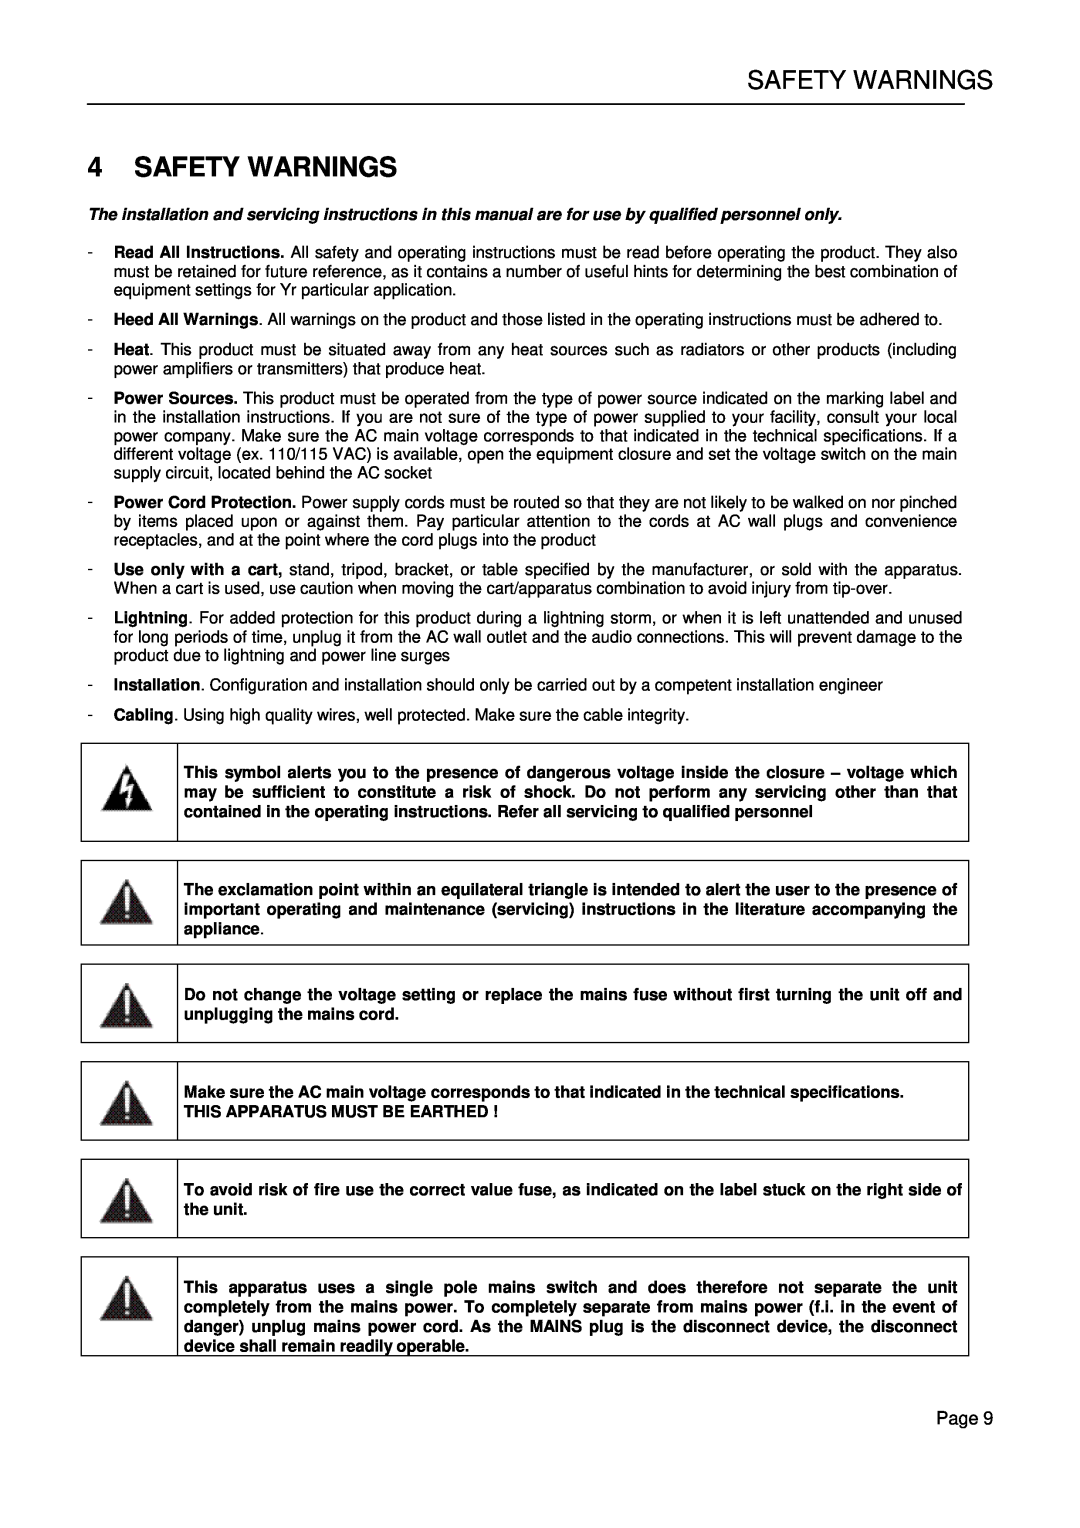 Falcon 15 manual Safety Warnings 